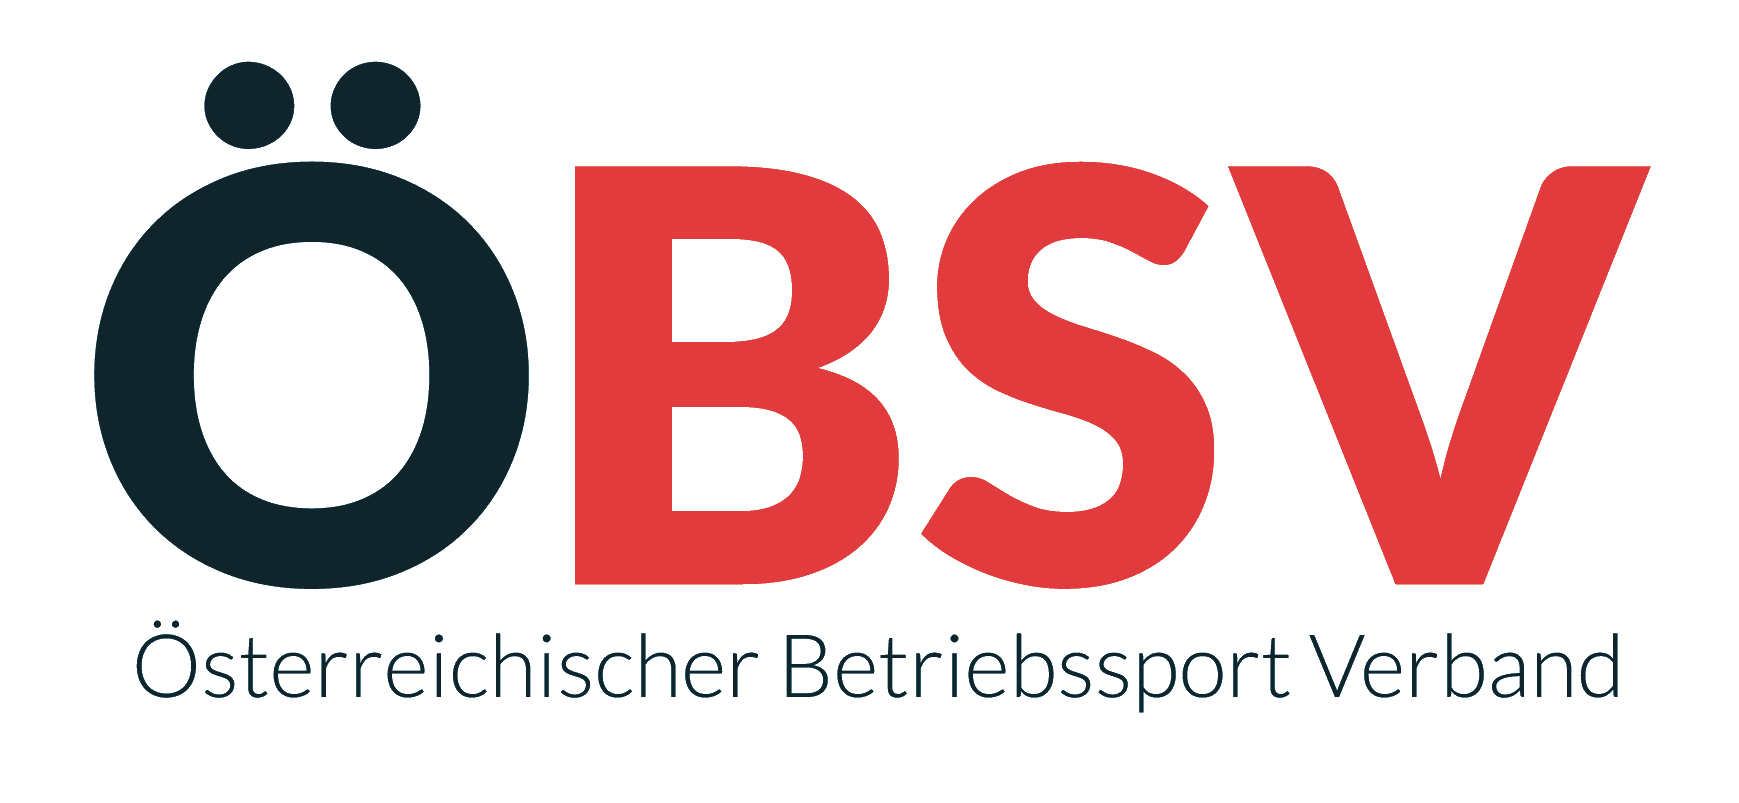 ÖBSV_Logo